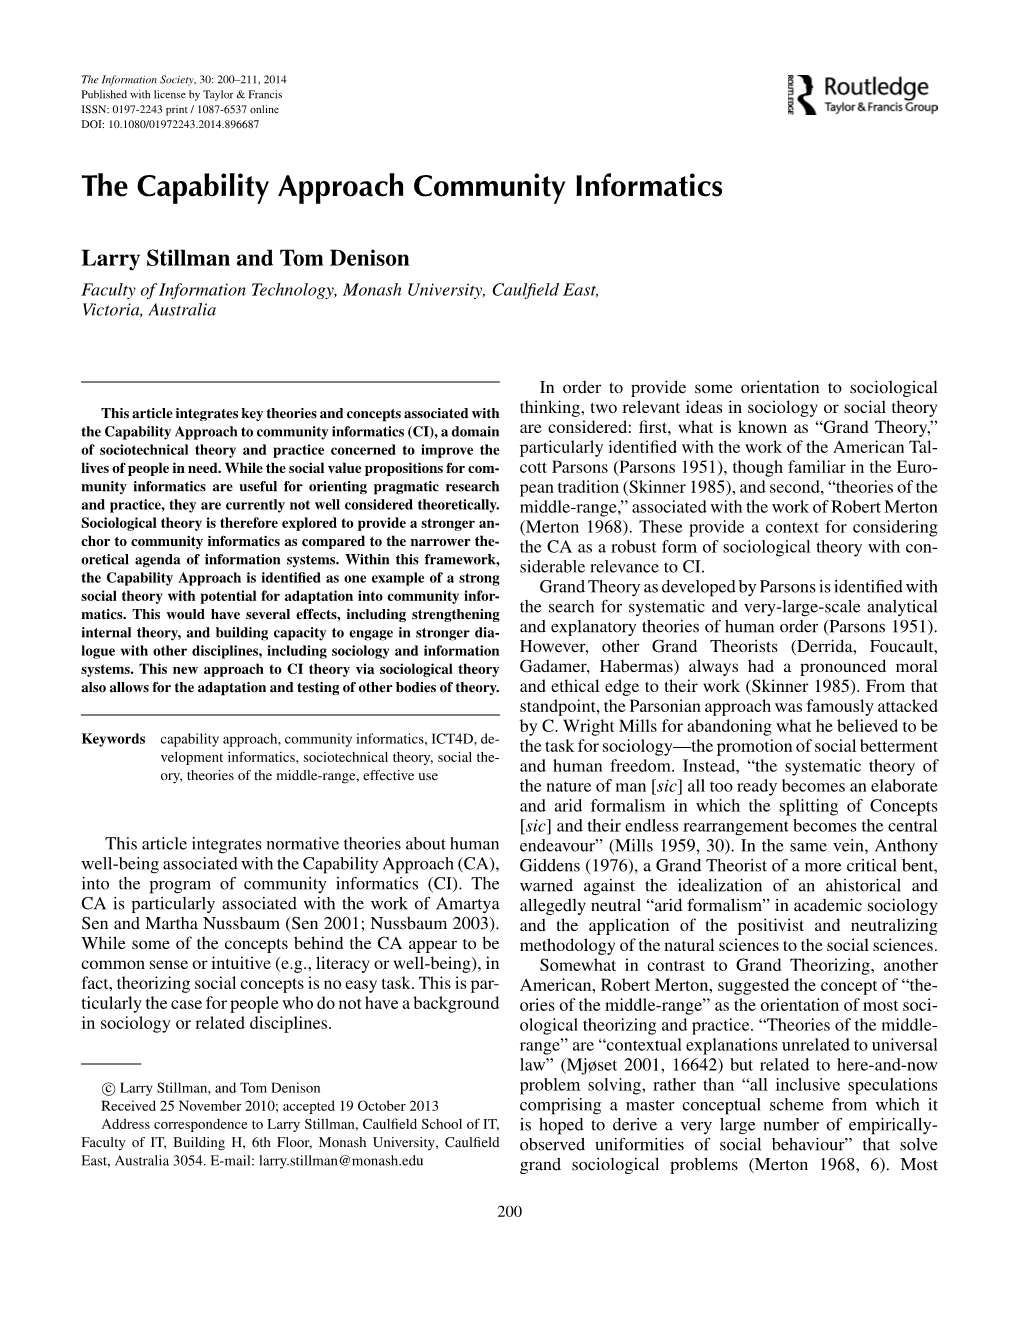 The Capability Approach Community Informatics